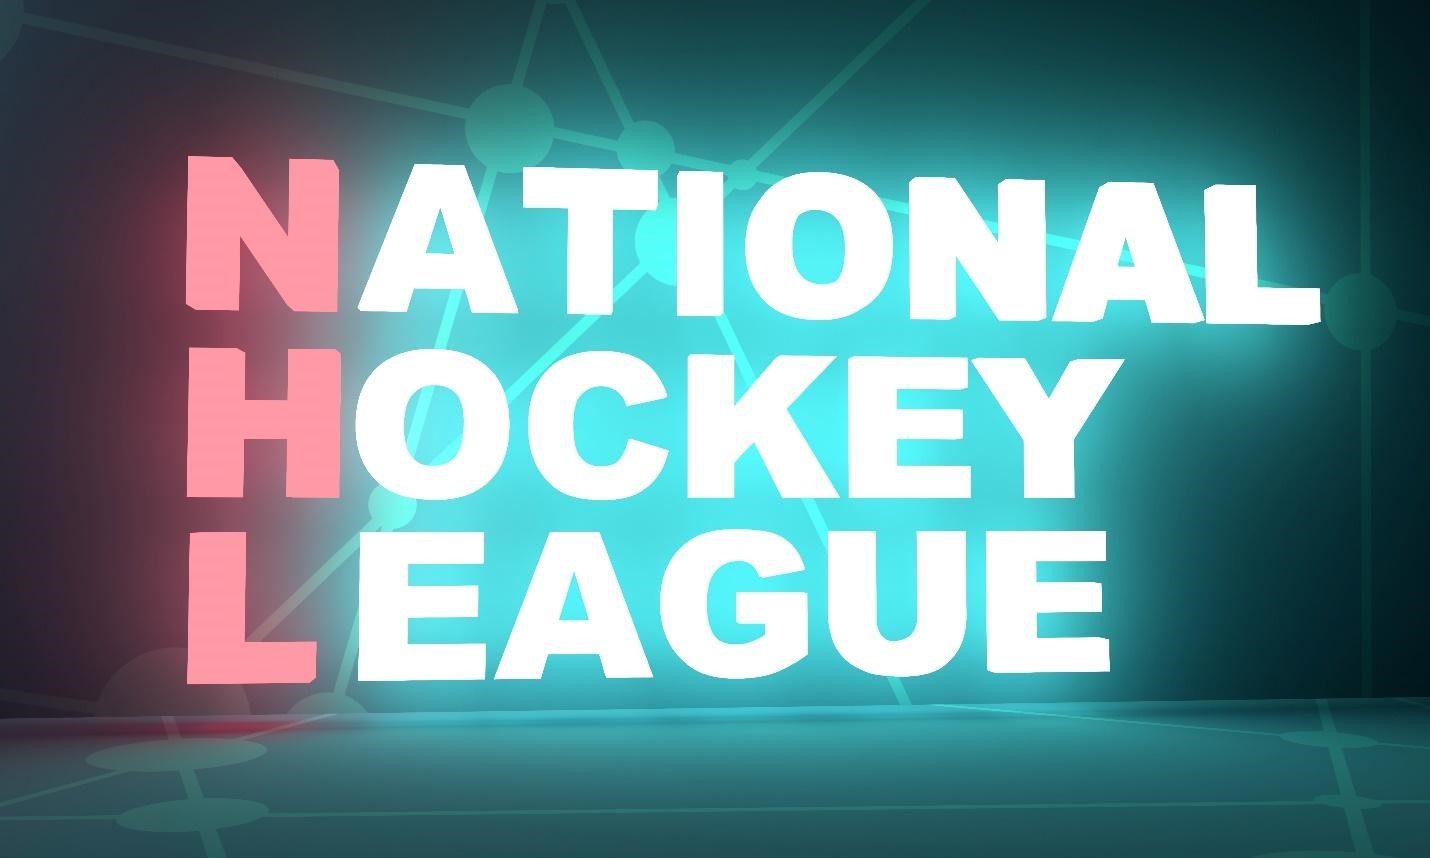 National Hockey League Sign